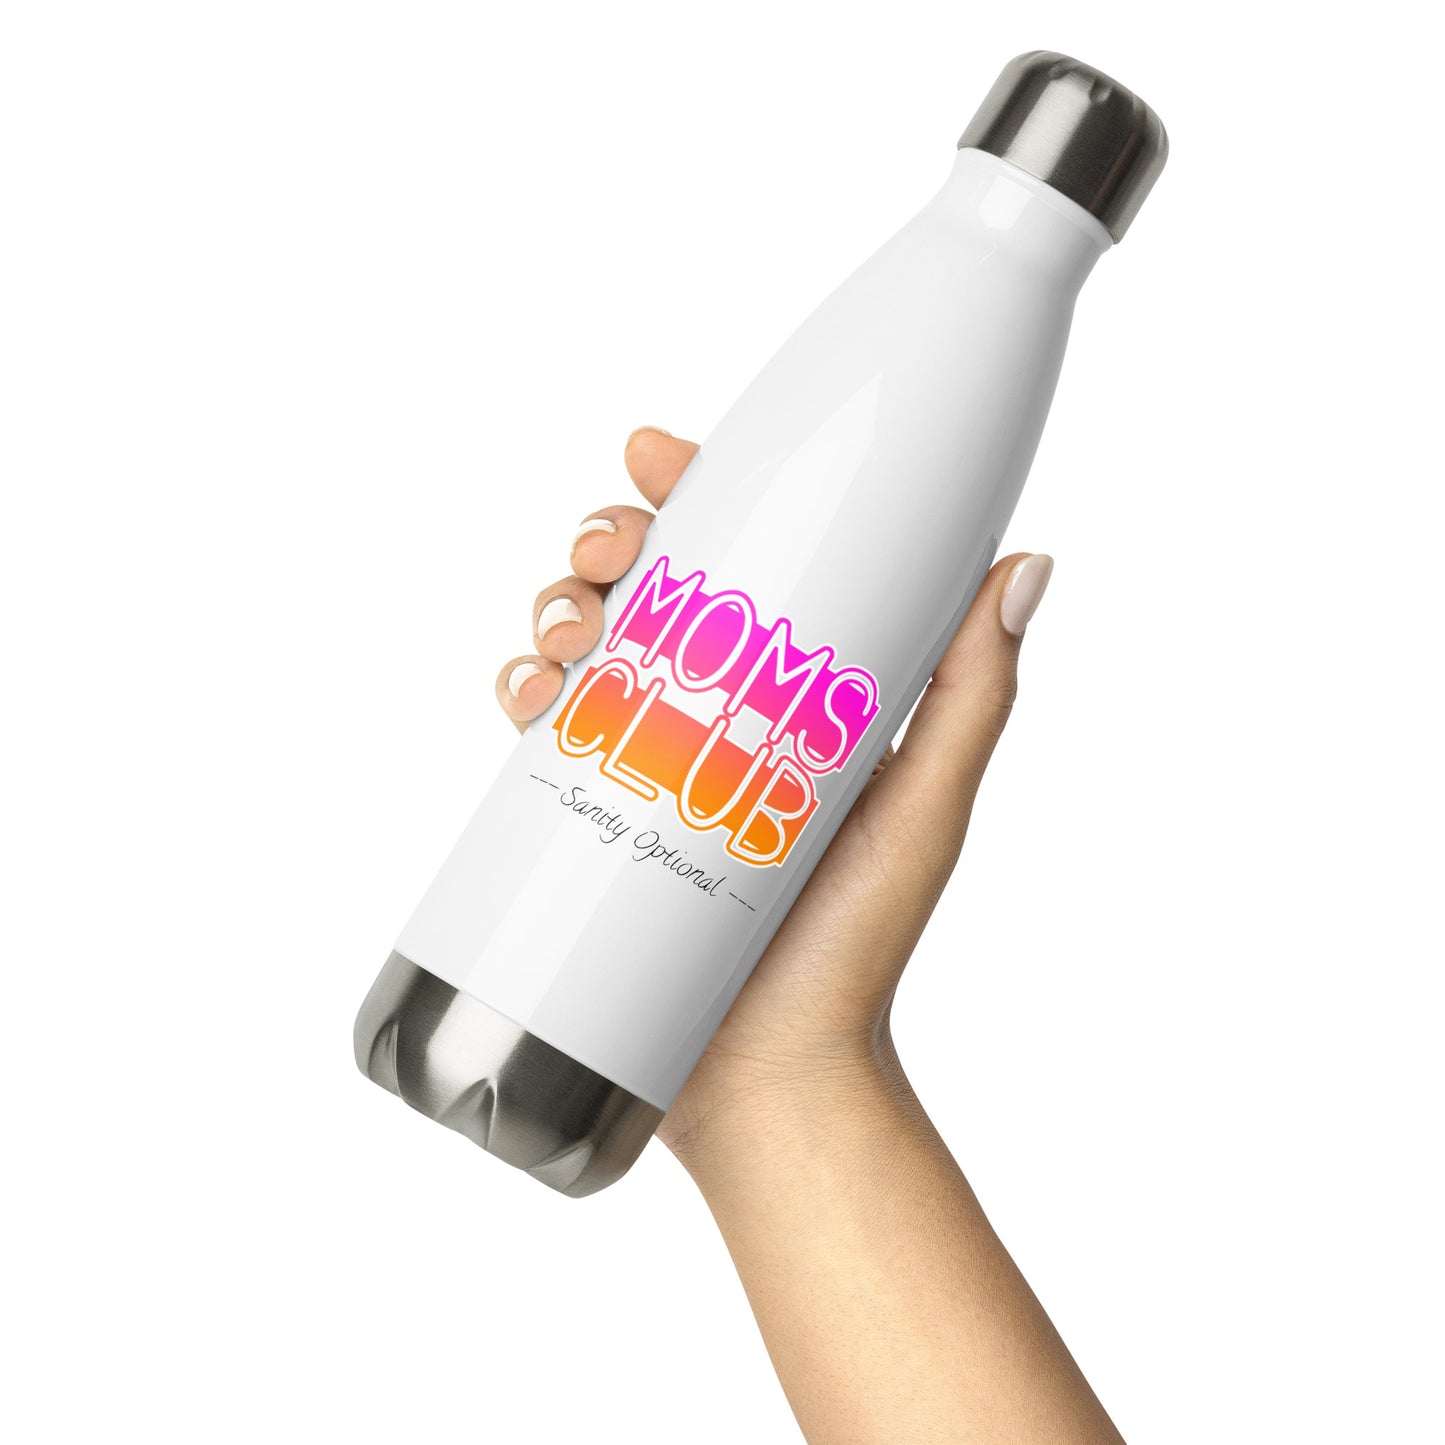 Moms Club -Sanity Optional Stainless Steel Water Bottle